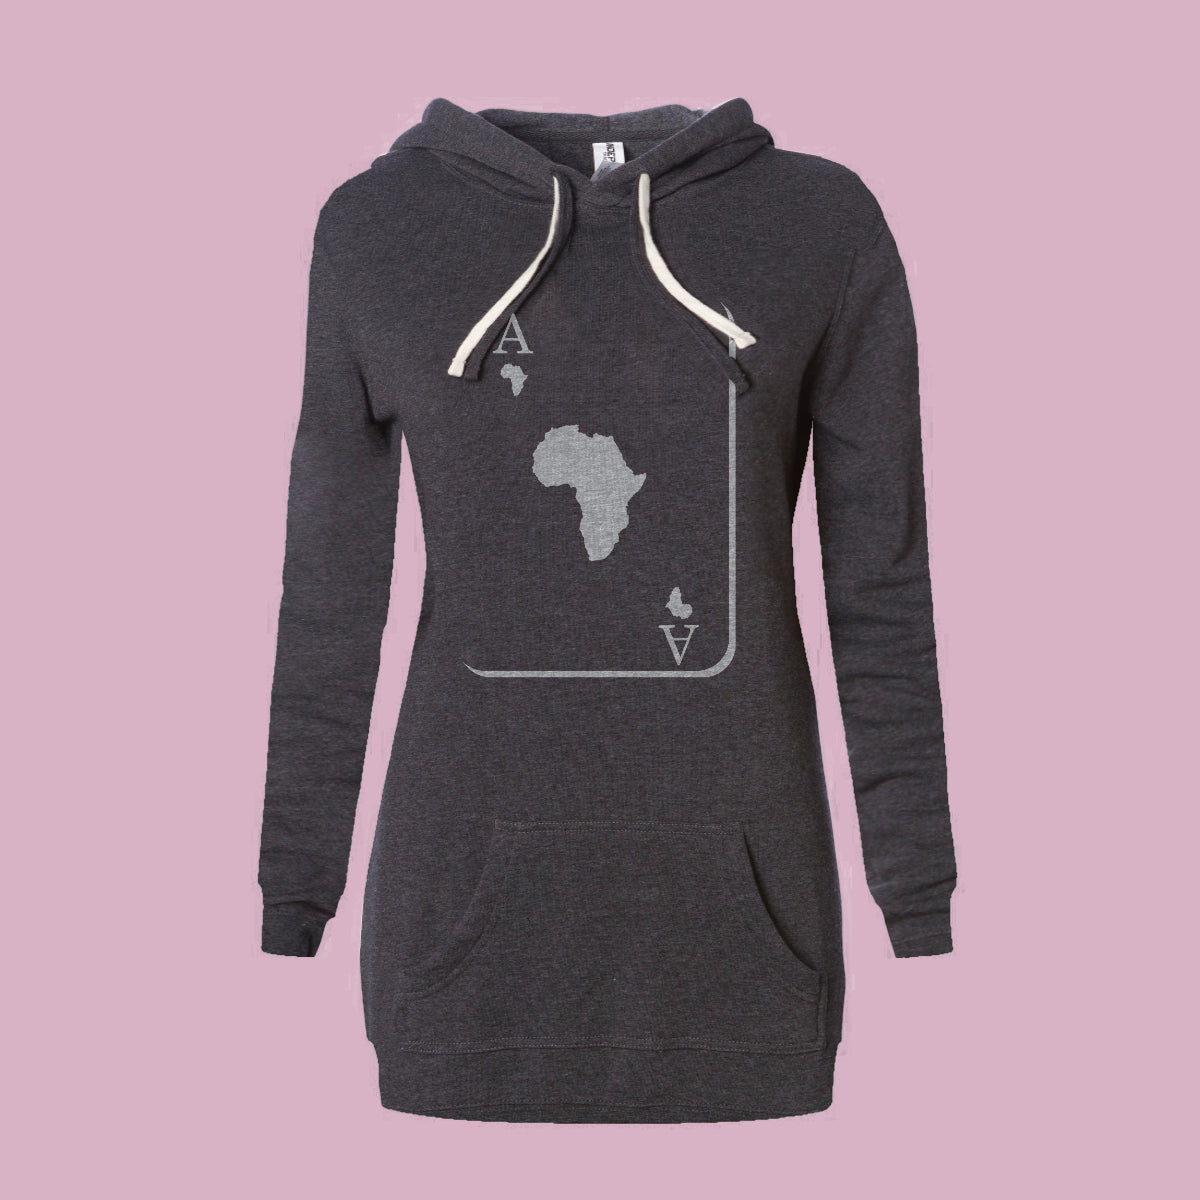 Ace of Africa - Map of Africa - Sweatshirt Dress